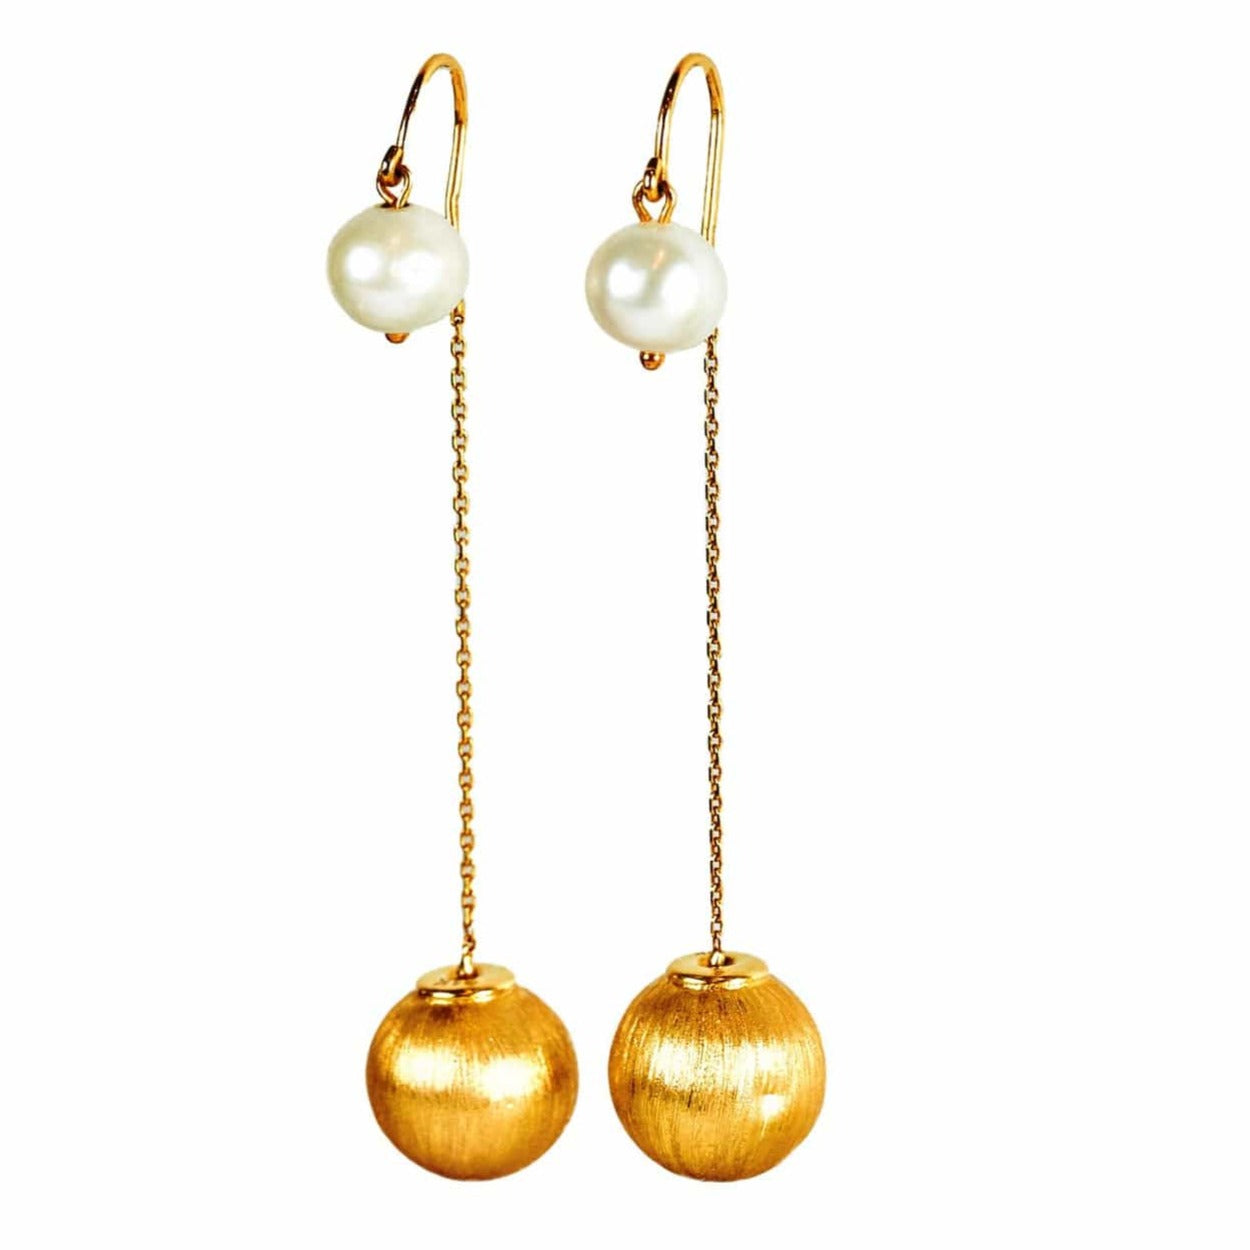 Ball and Chain Pearl Drop Earrings